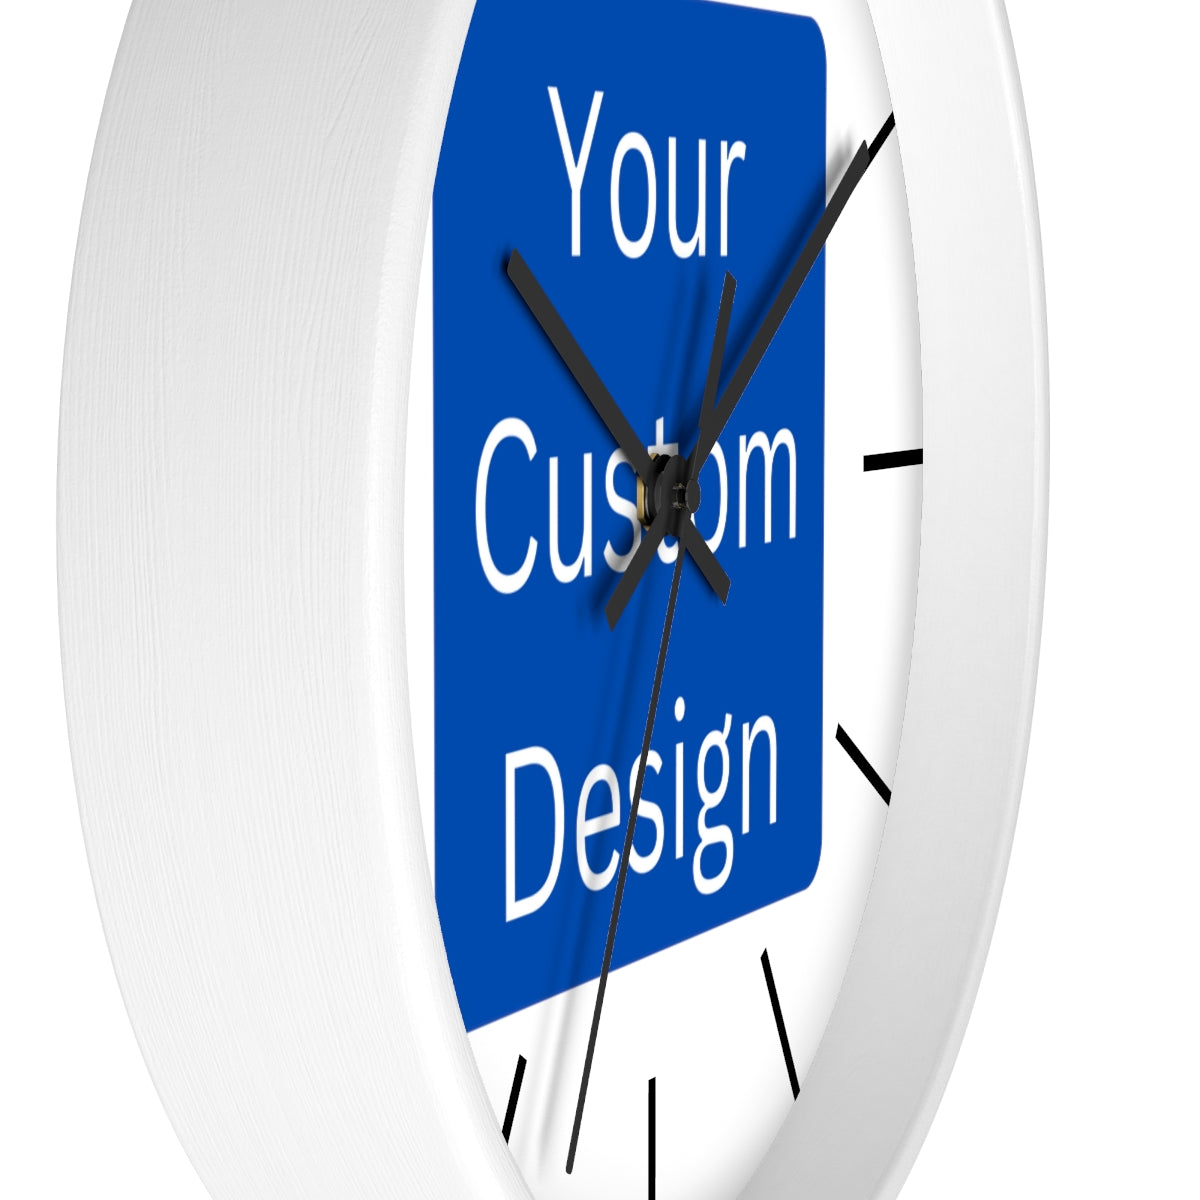 Customizable Wall clock